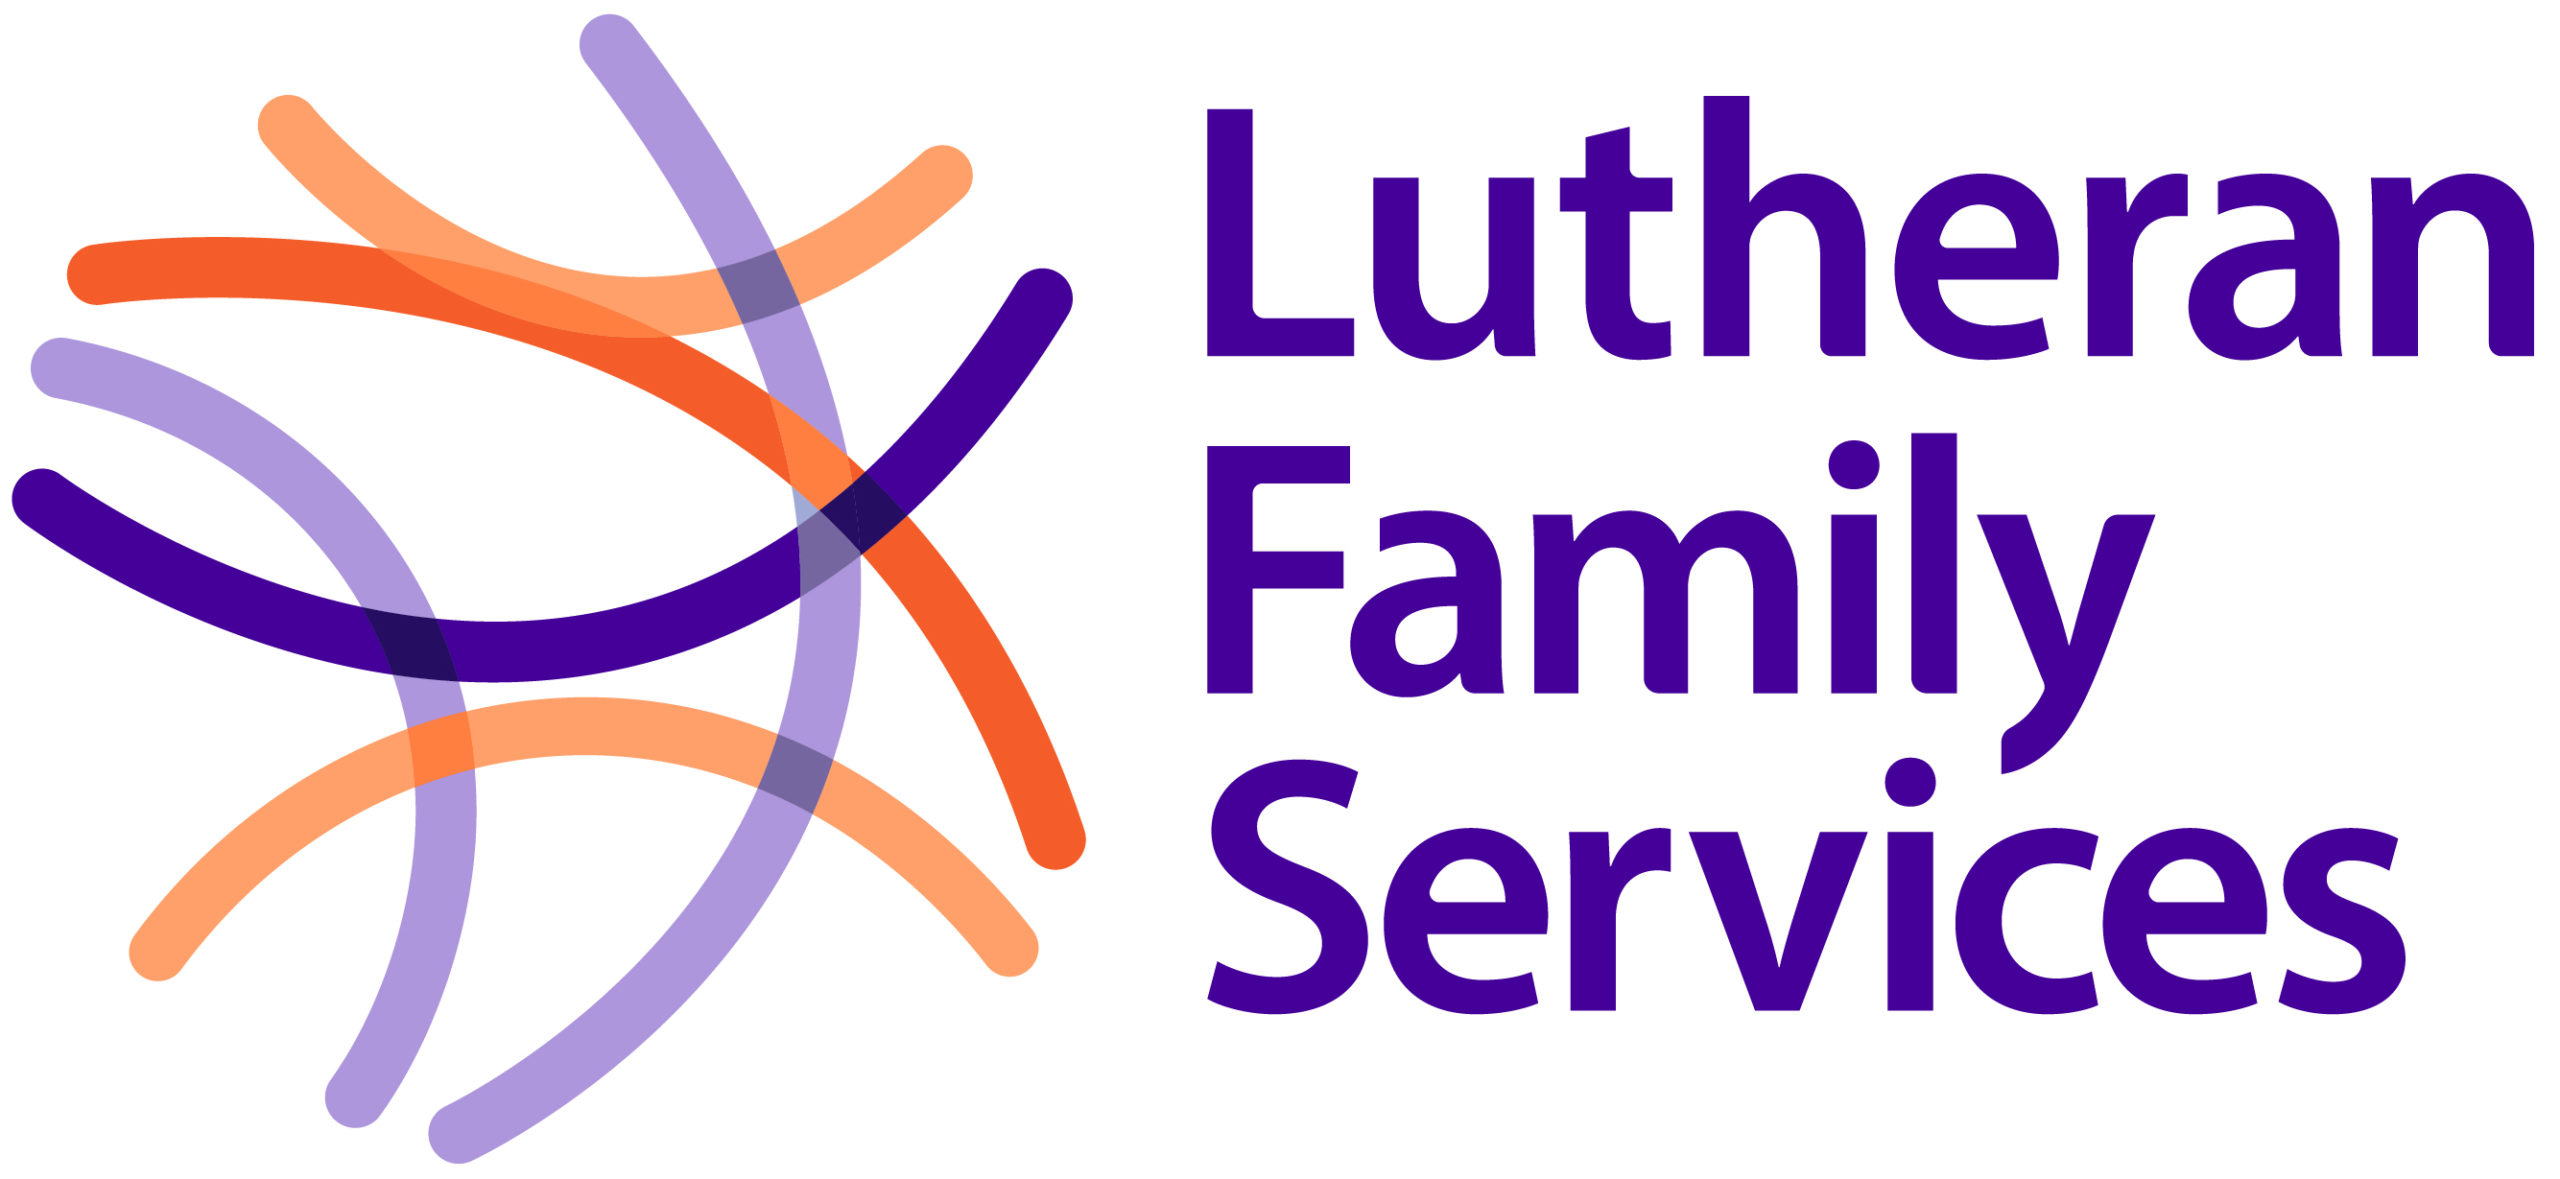 Lutheran Family Services Logo